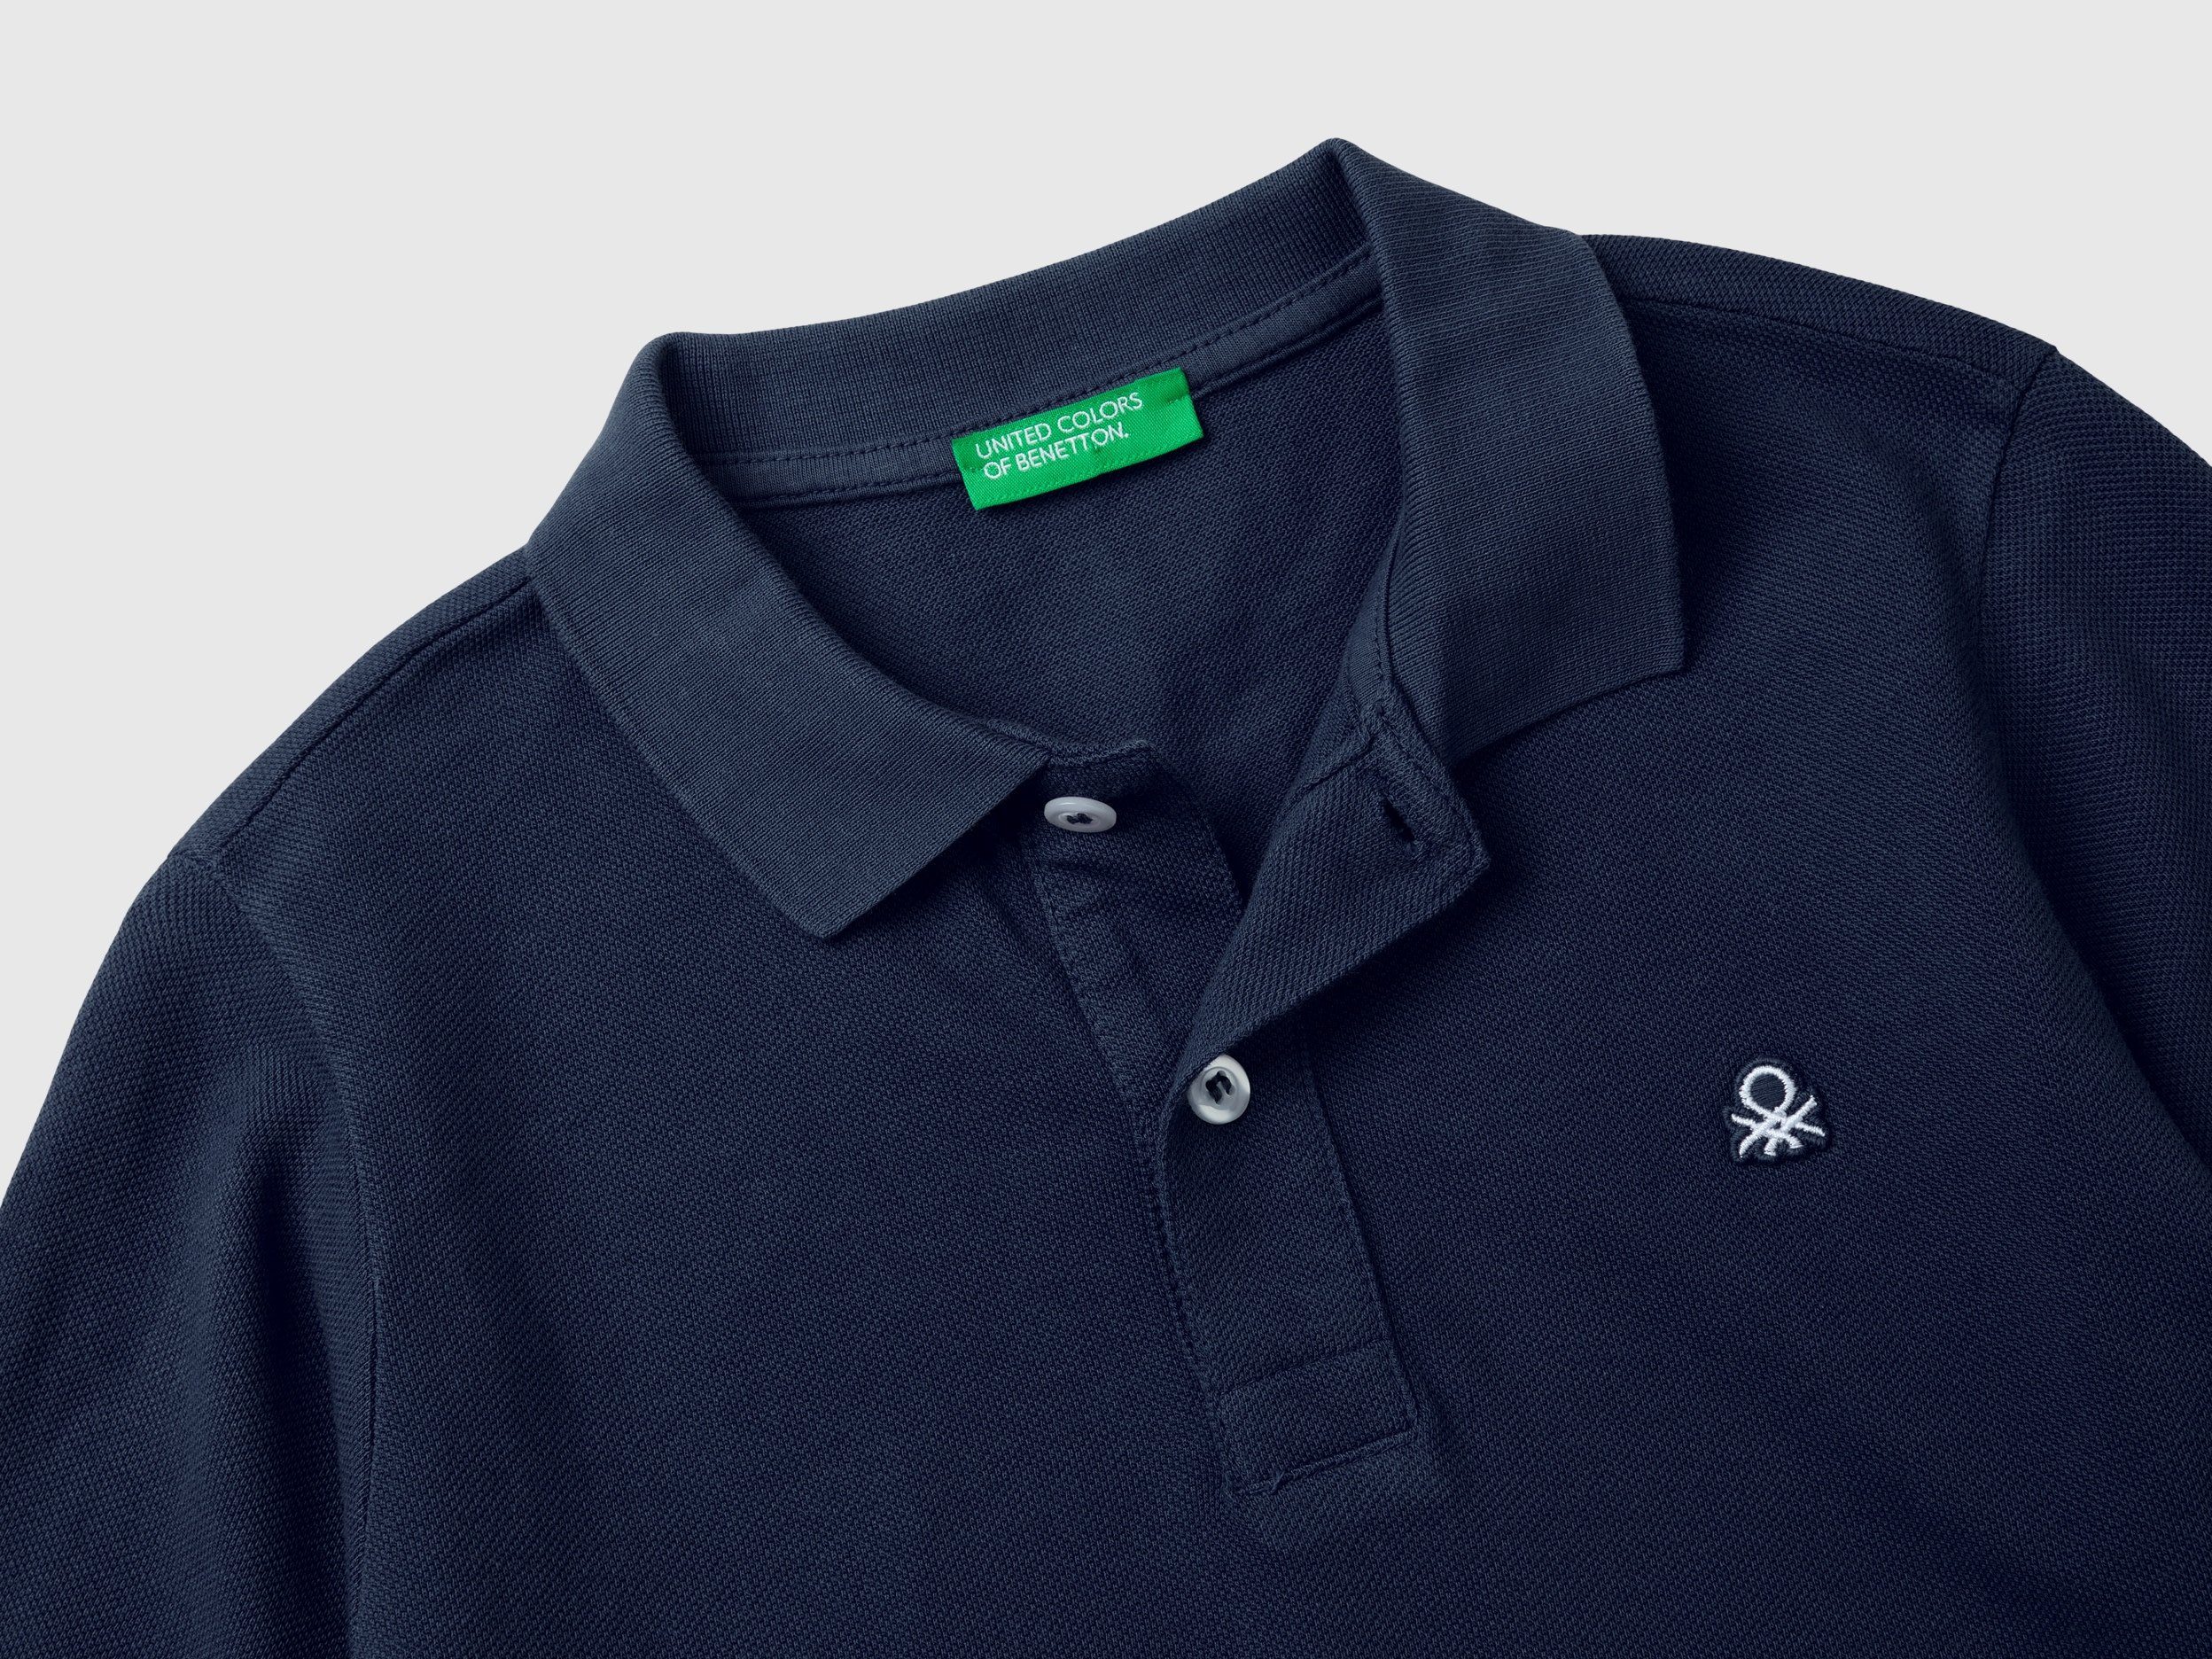 mit Langarm-Poloshirt an Logostickerei of Brust United Colors der Benetton